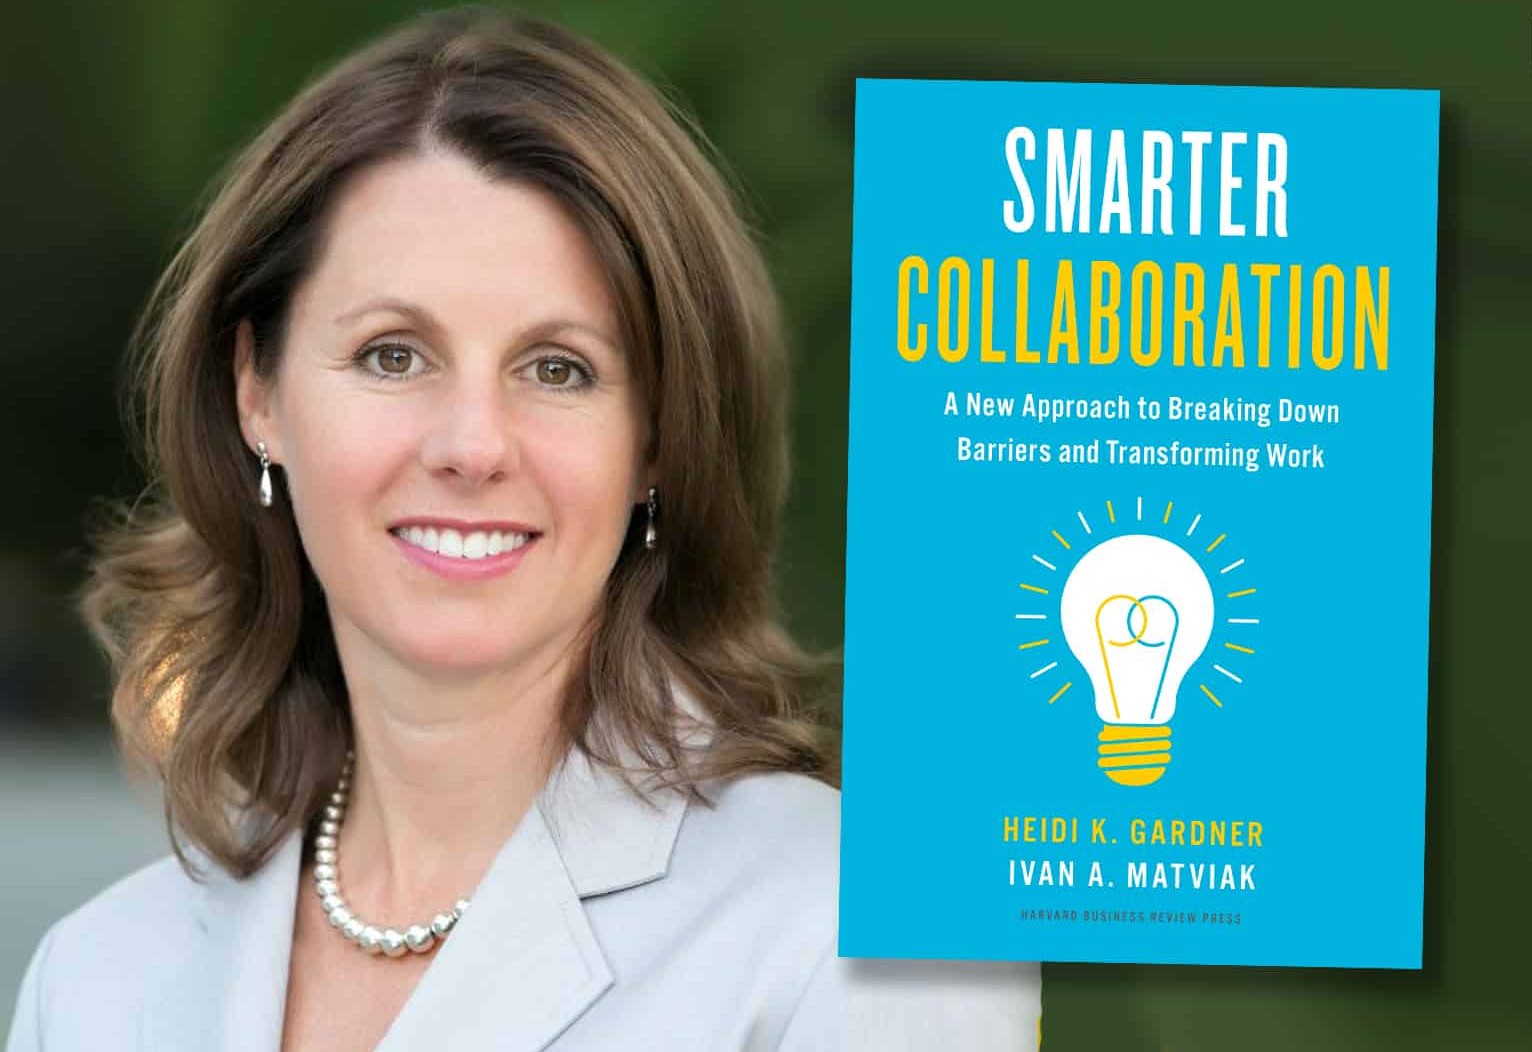 Heidi K. Gardner : Smarter collaboration